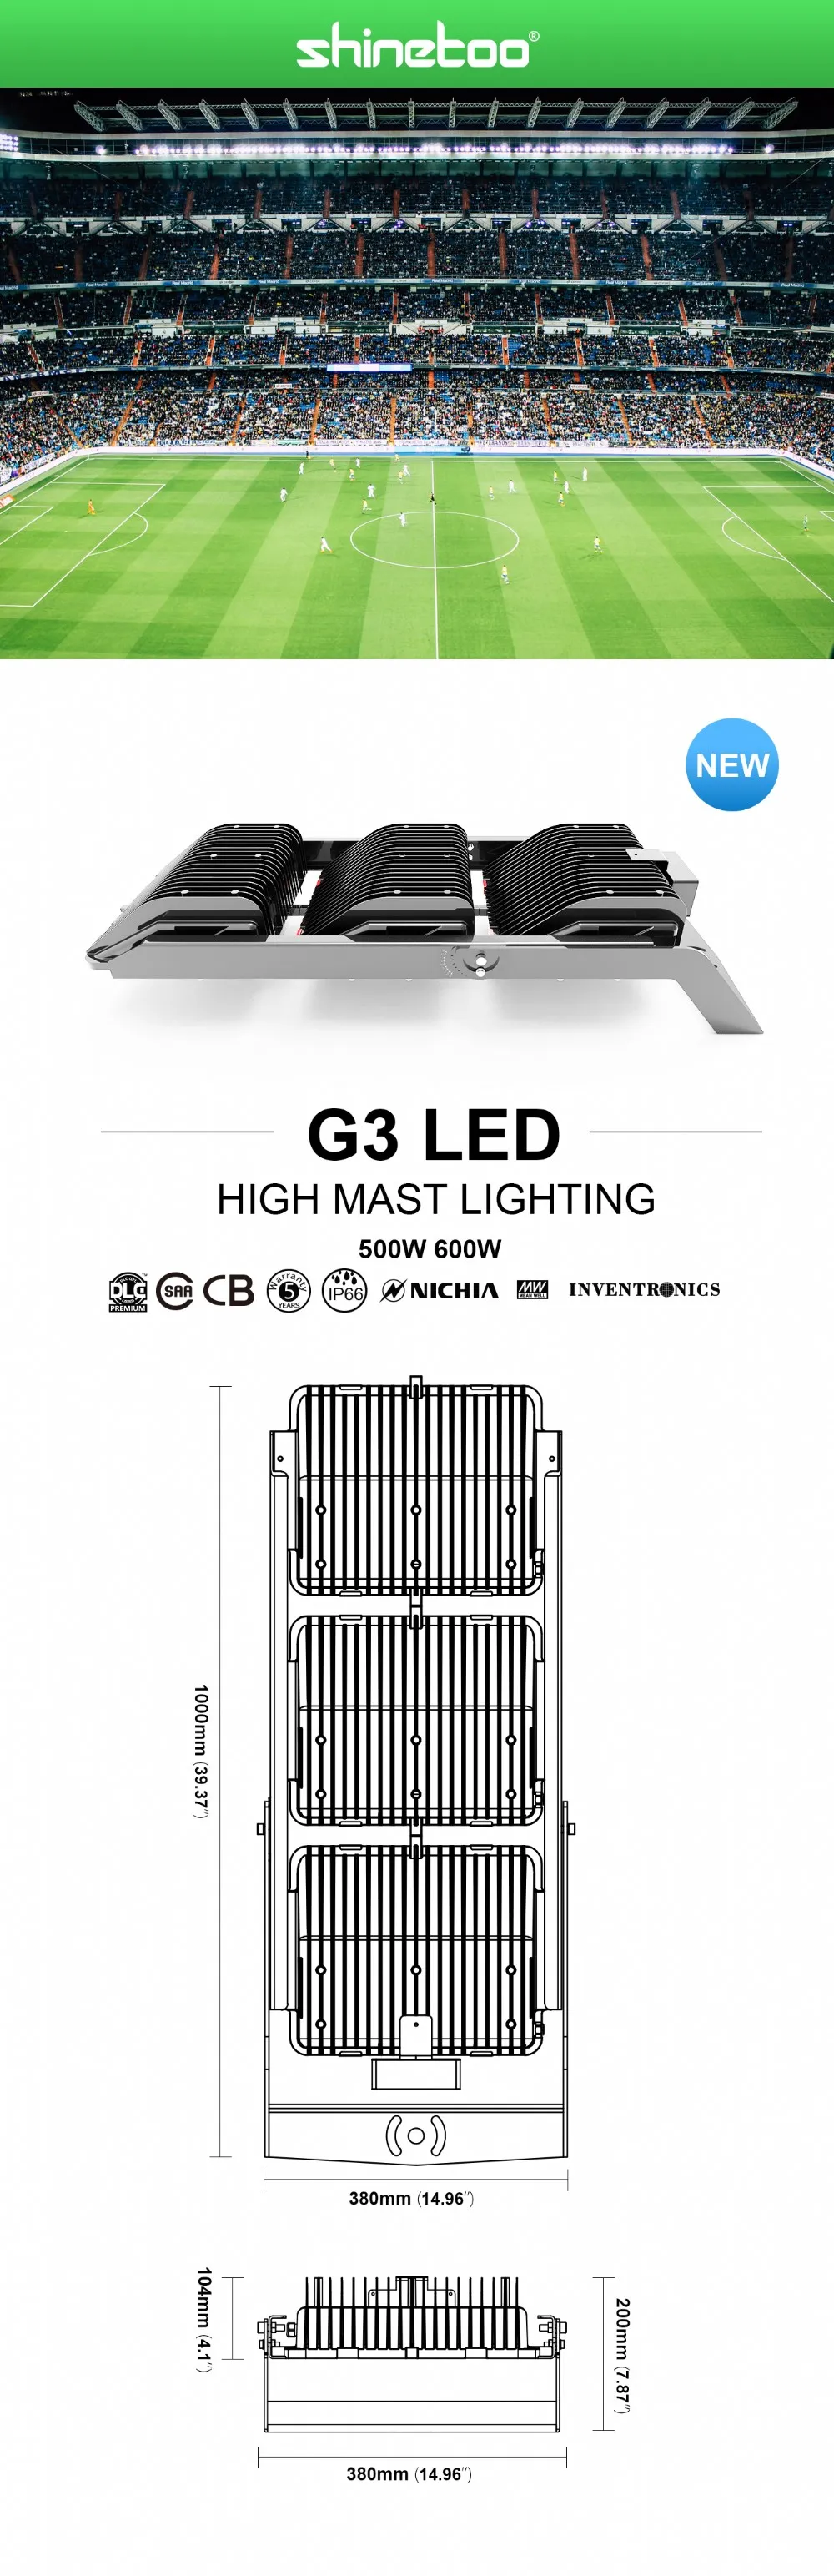 G3 LED High Mast Lighting-3